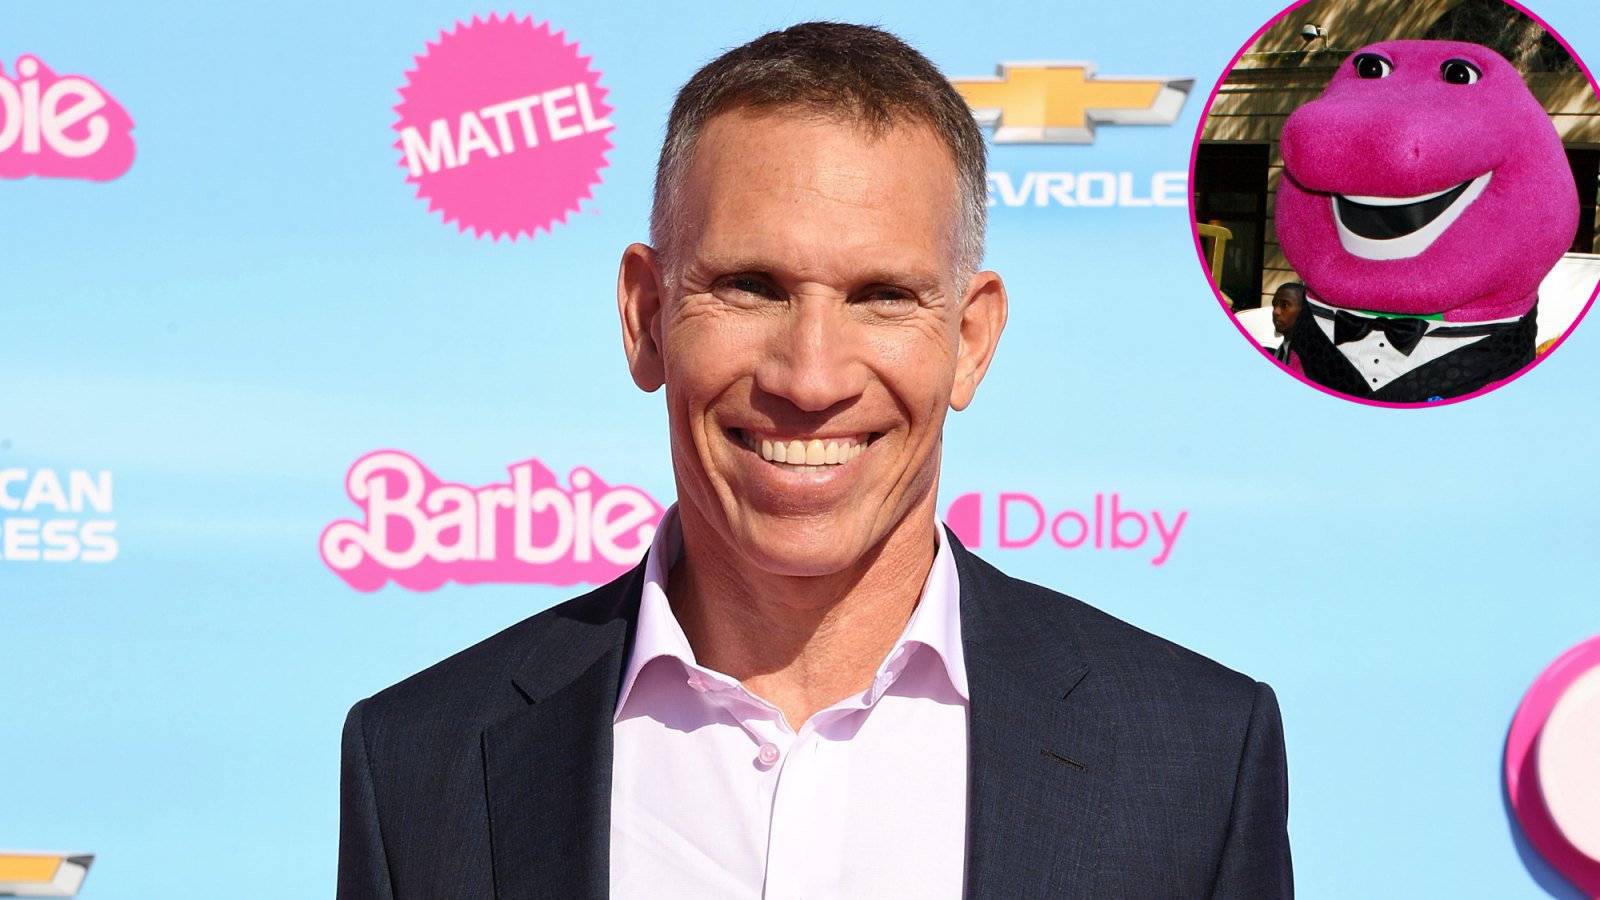 Mattels CEO Ynon Kreiz Says Barney Will Not Be an Odd Film Despite Backlash